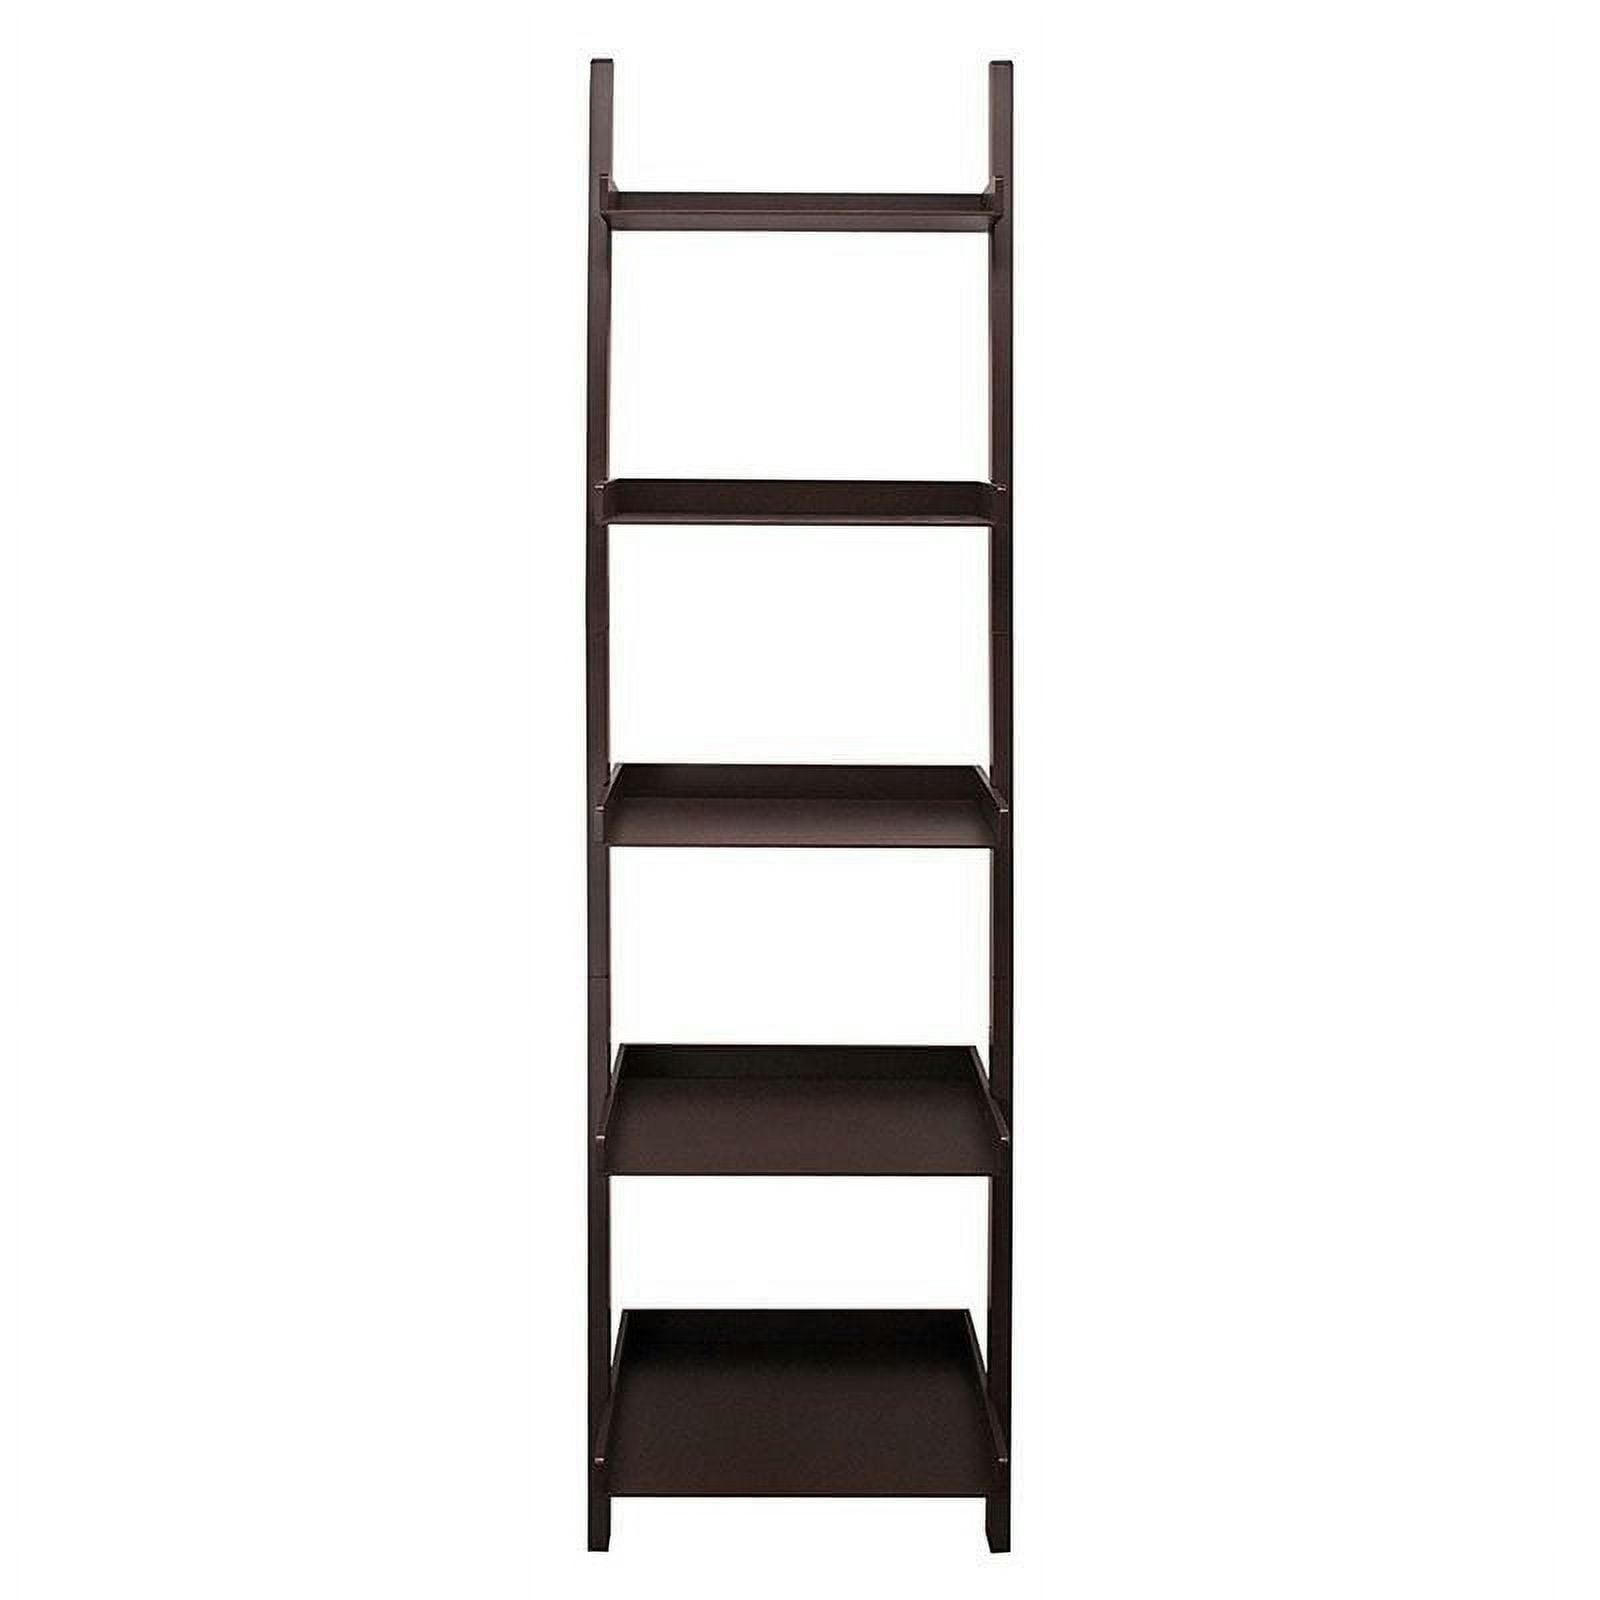 Espresso Modern 5-Tier Ladder Bookshelf in Sleek Wood Finish